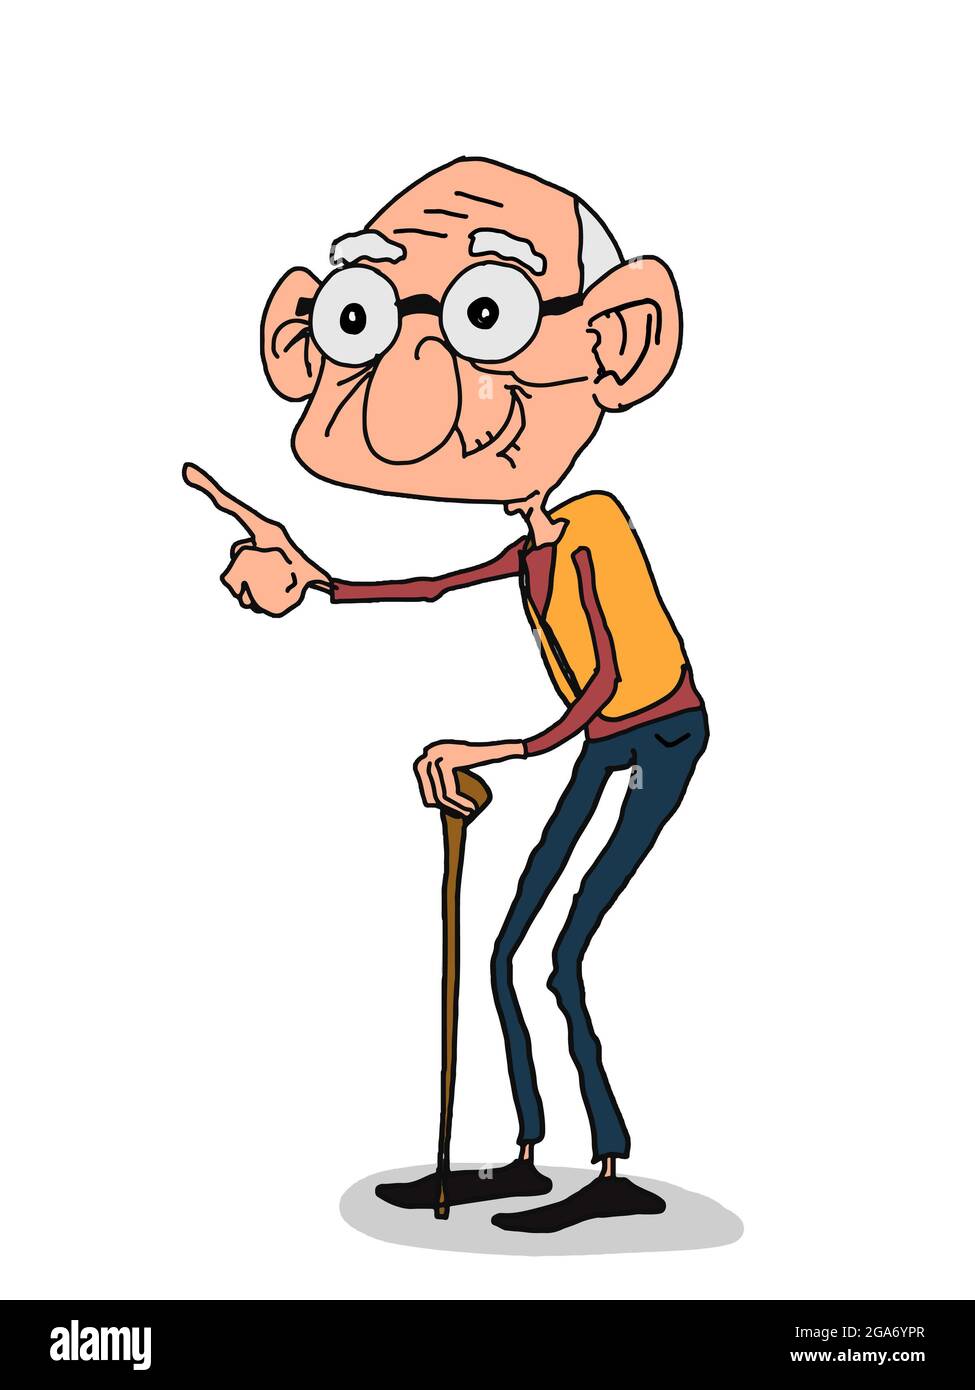 Cartoon cute old man,elderly ,grandfather illustration Stock Photo - Alamy